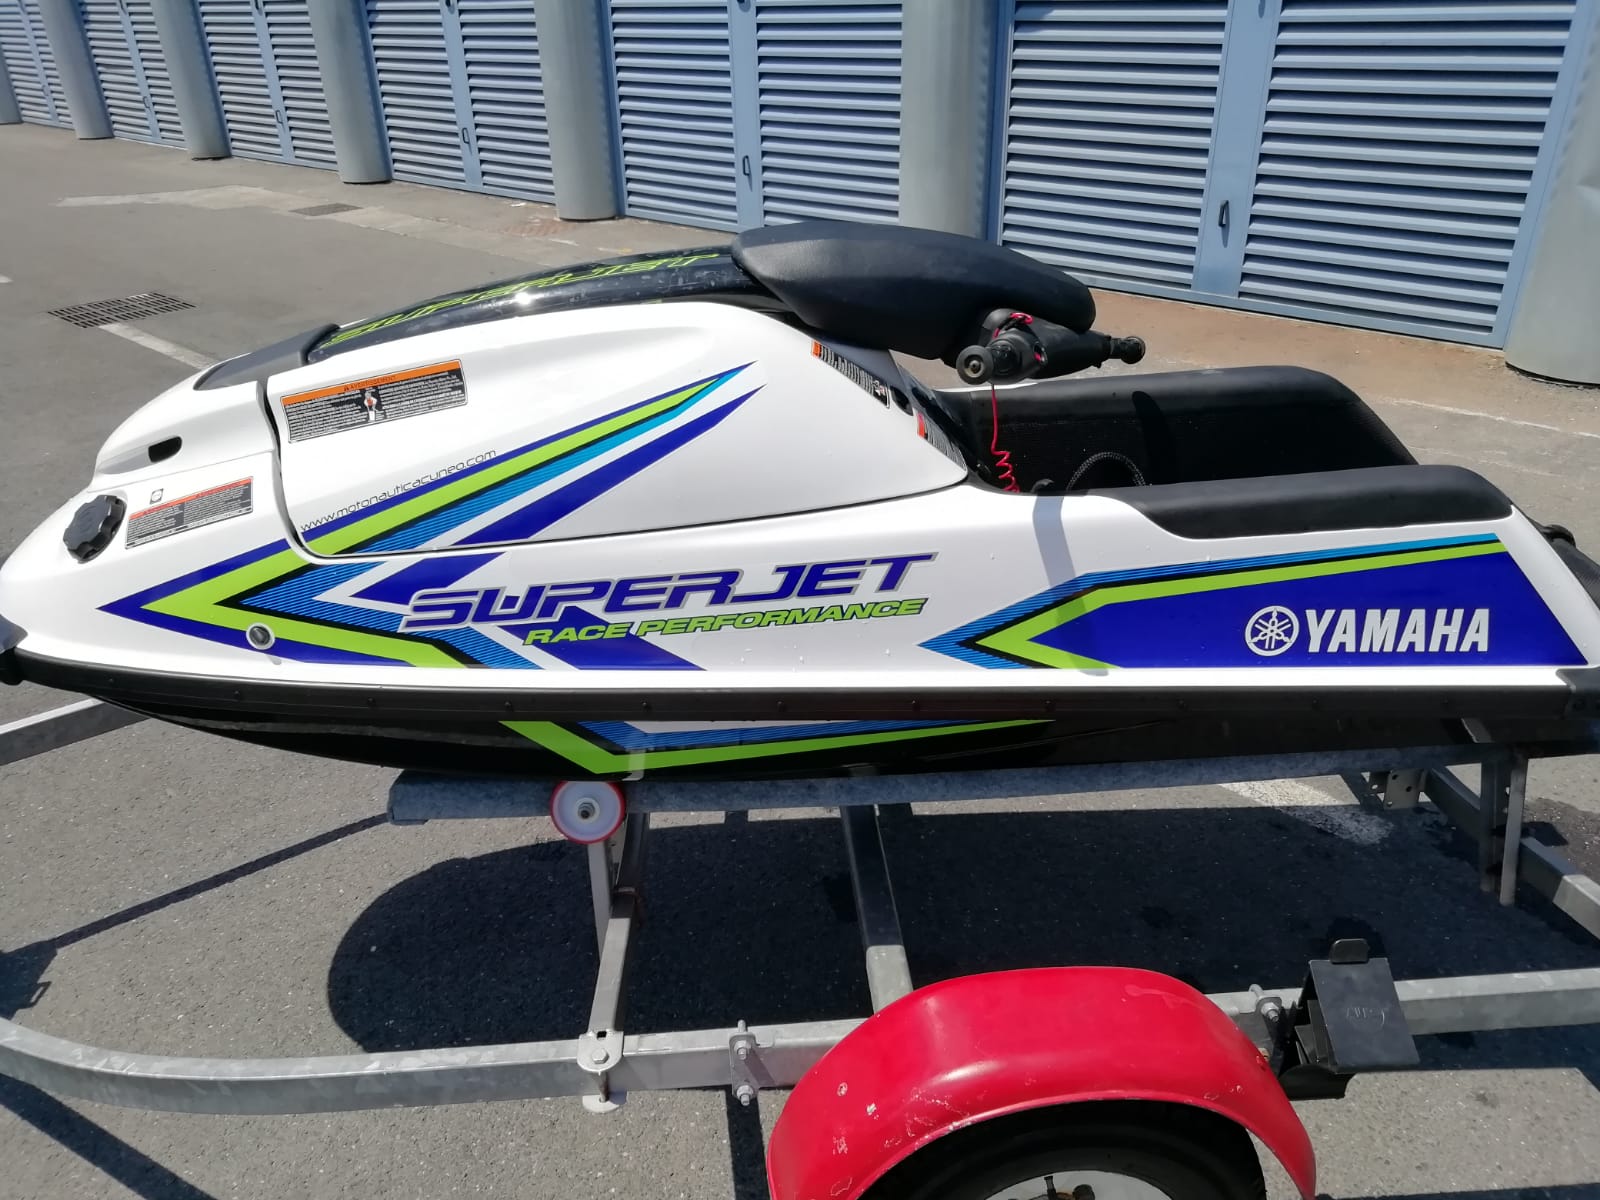 Moto d'acqua Yamaha Superjet